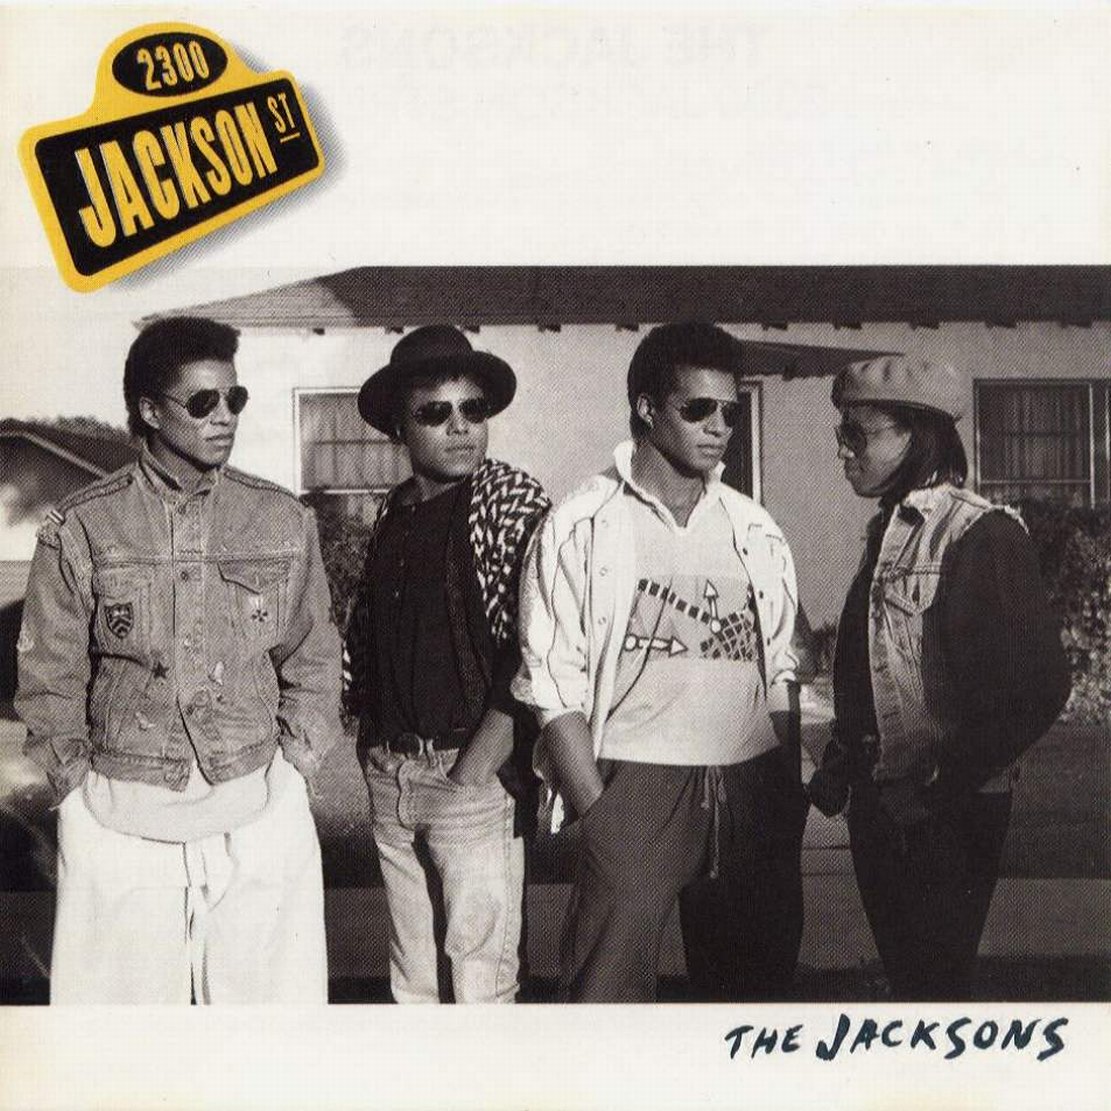 The Jacksons 2300 Jackson Street cover artwork